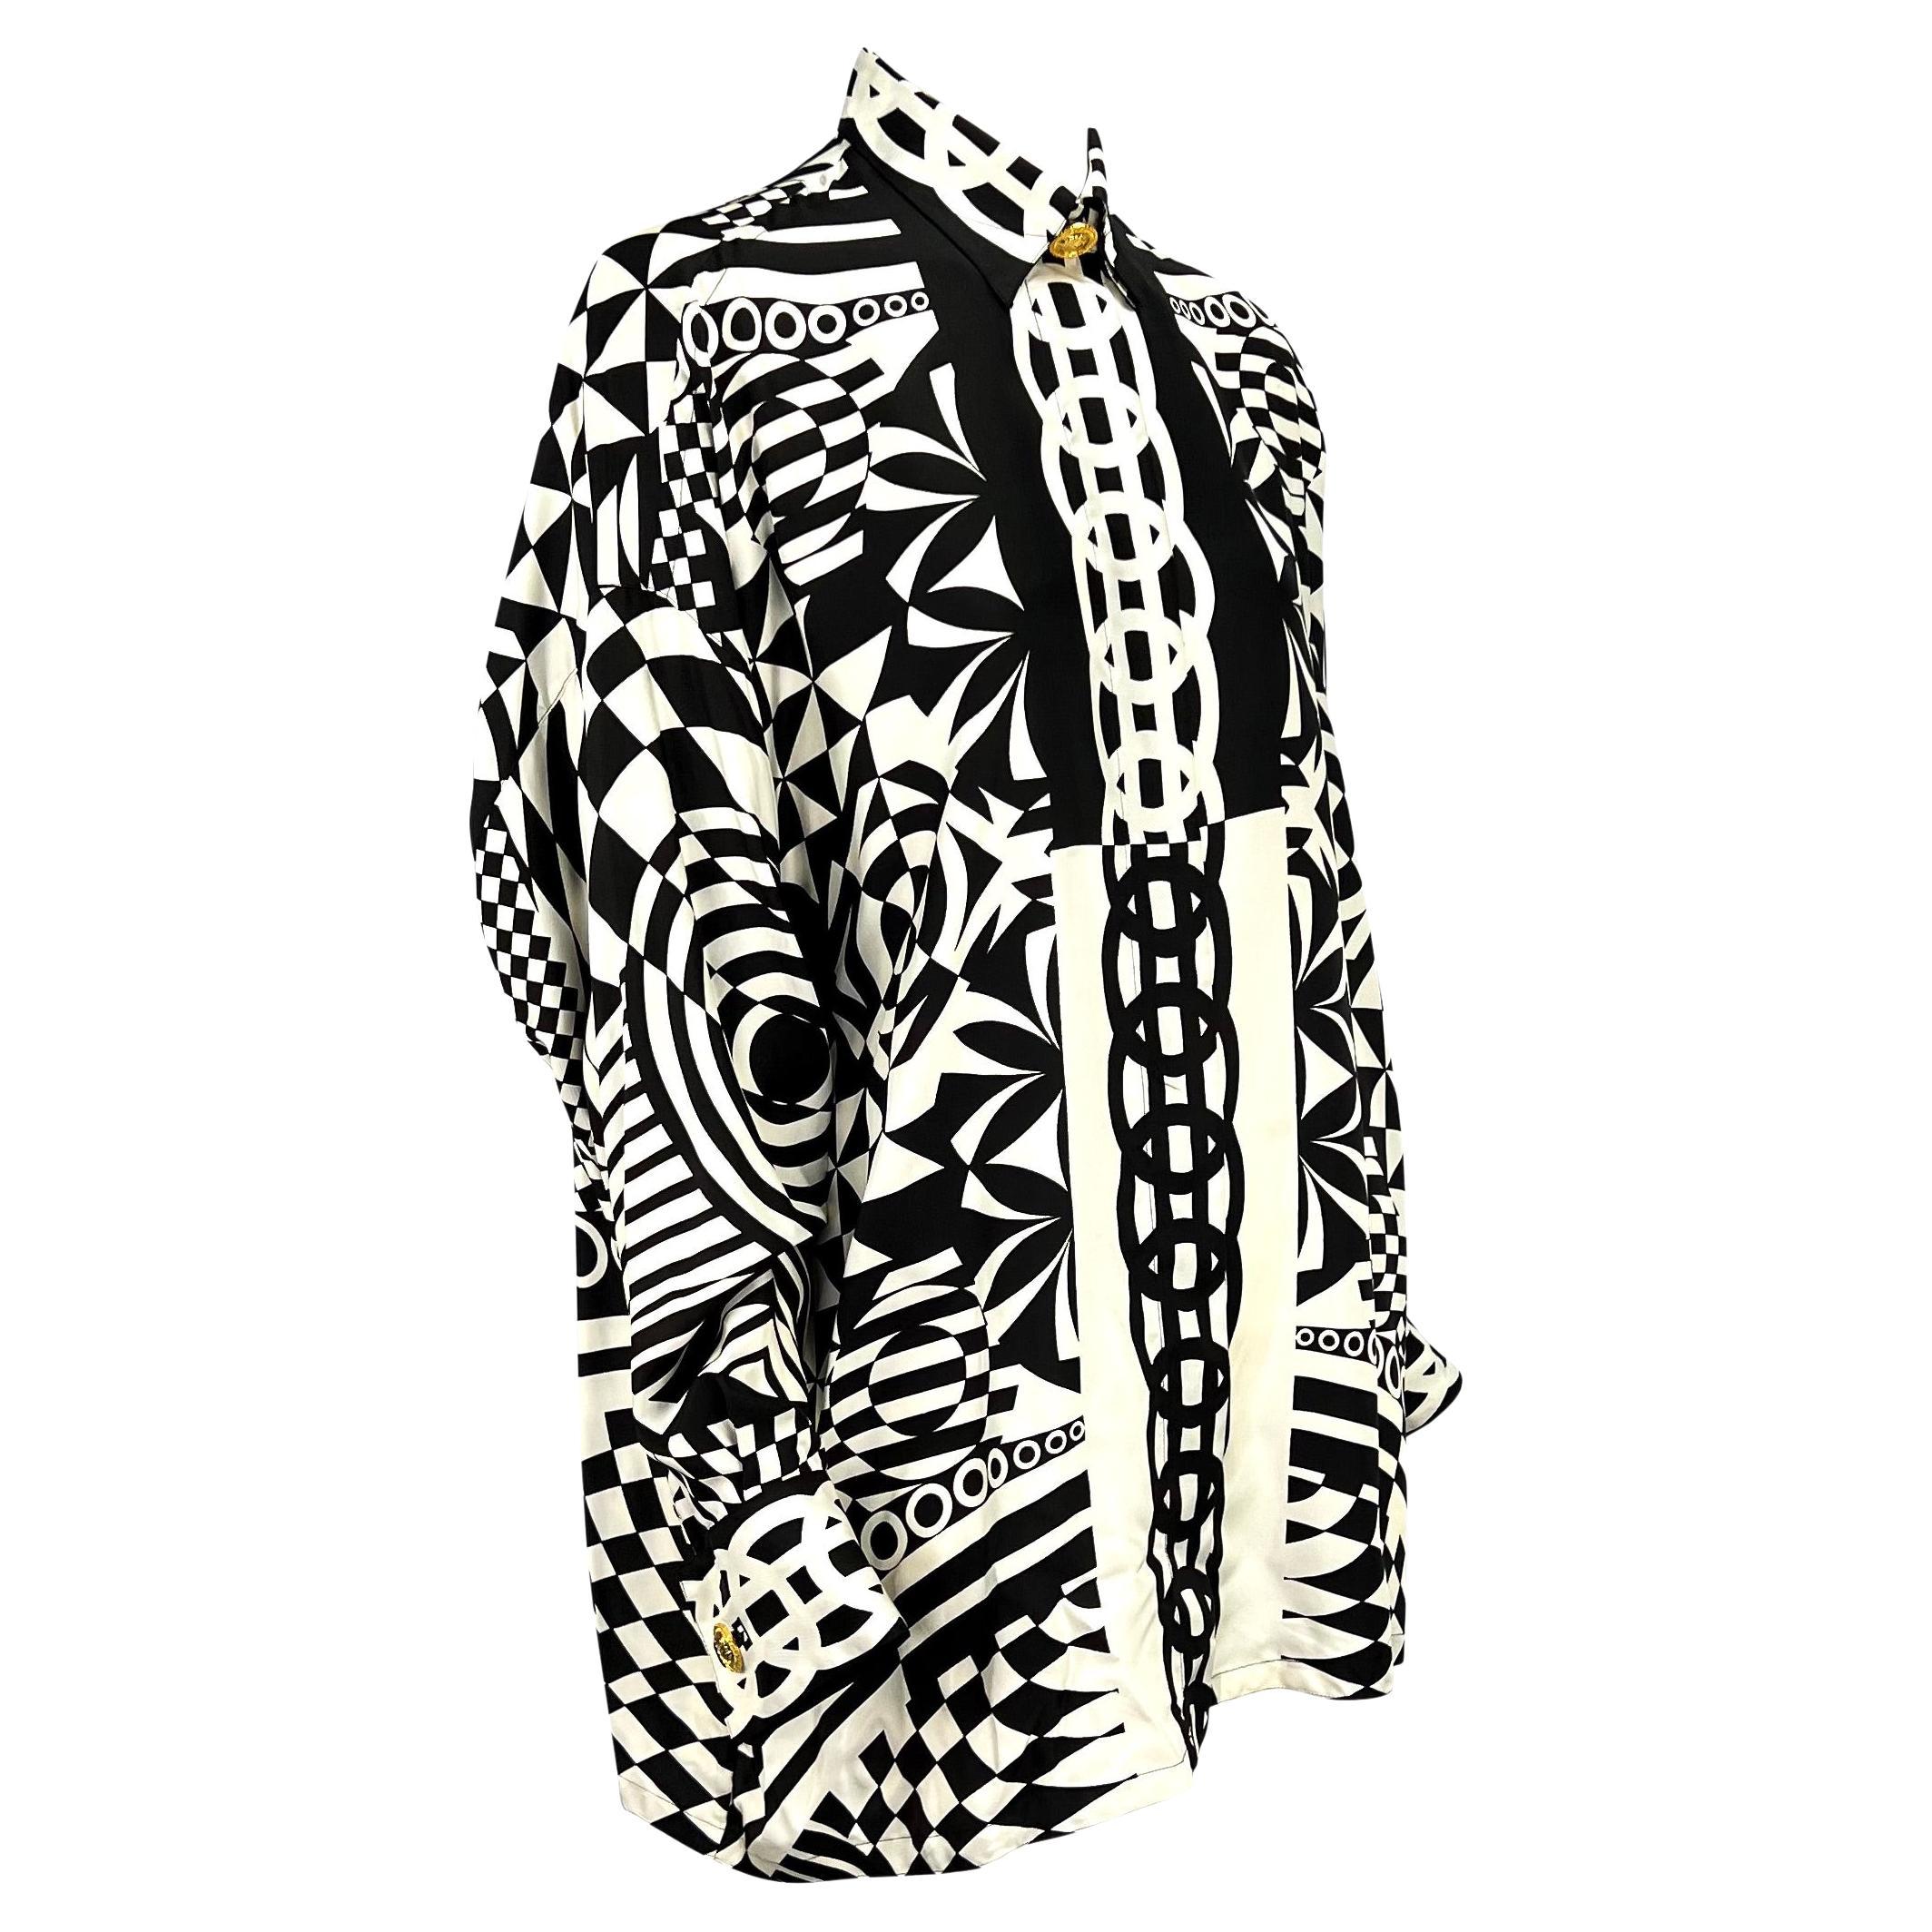 S/S 1992 Gianni Versace Couture Silk Black & White Geometric Print Button Down For Sale 3